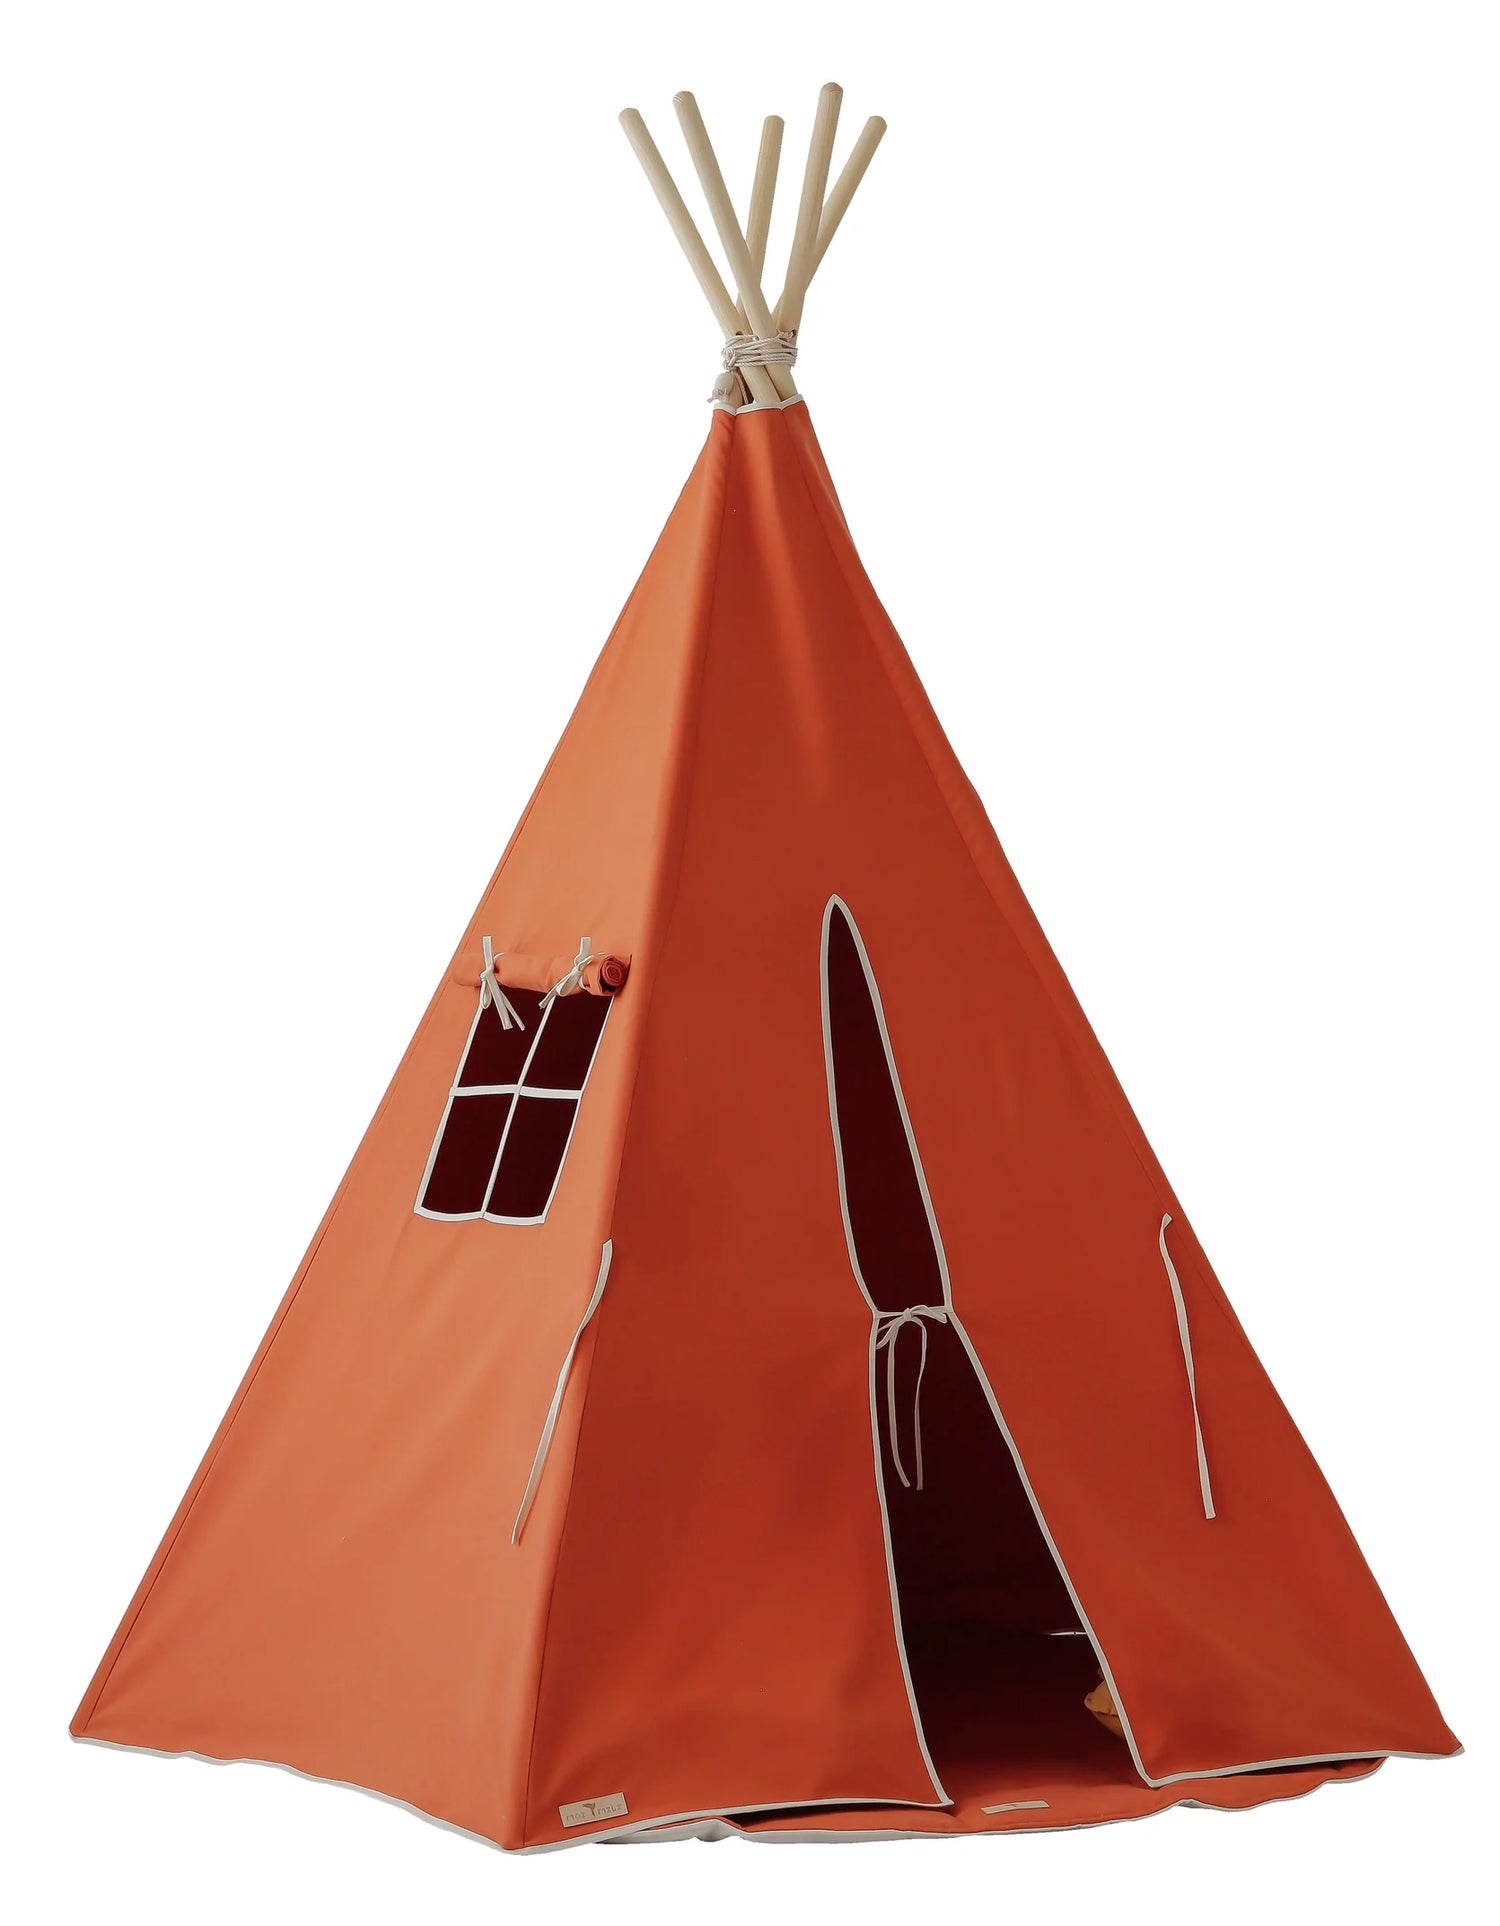 Moi Mili Moi Mili Tipi Tent Classic "Red Fox" - Decomusy